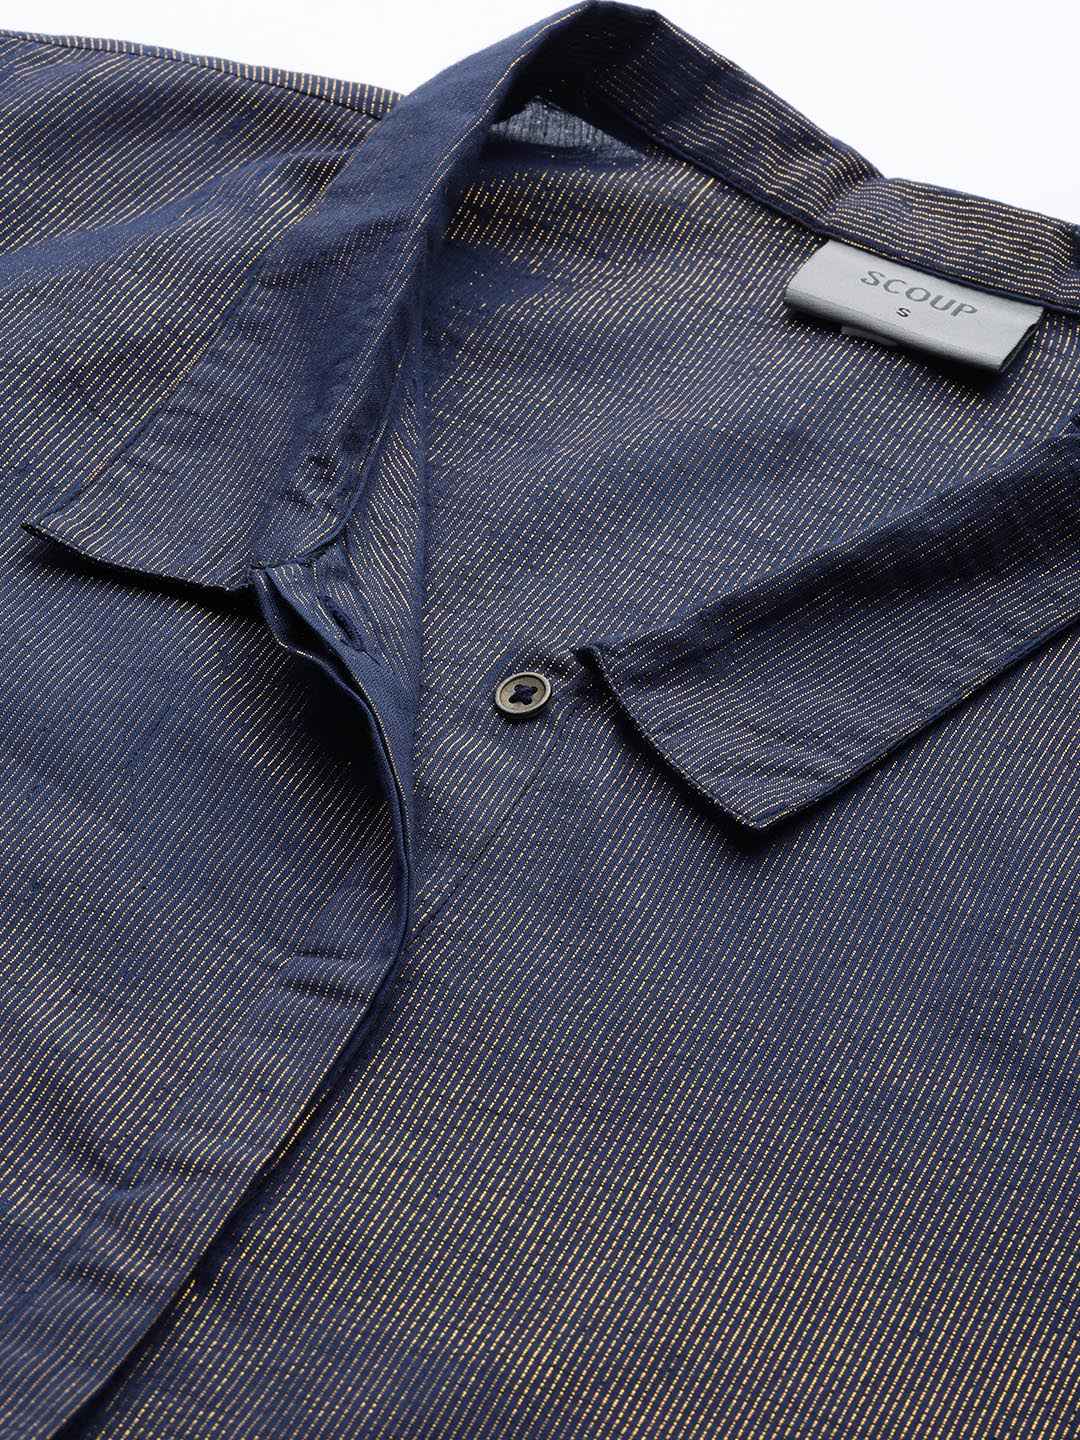 Blue cotton lurex shirt